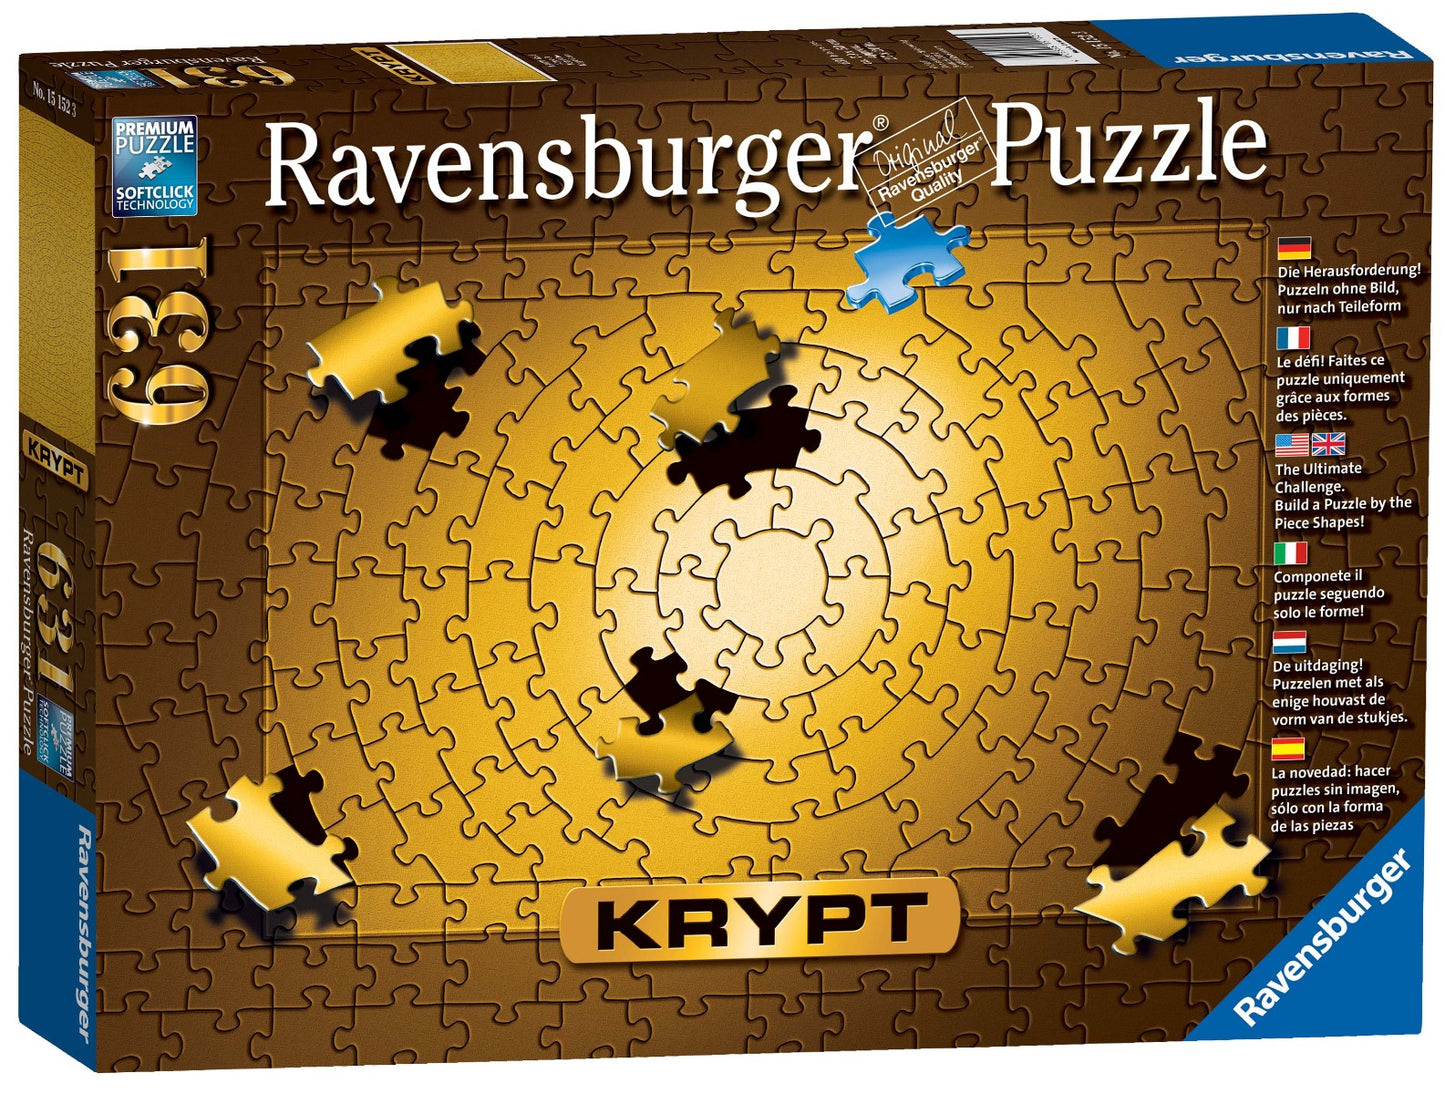 Ravensburger 15152 Krypt Gold 631pc Jigsaw Puzzle